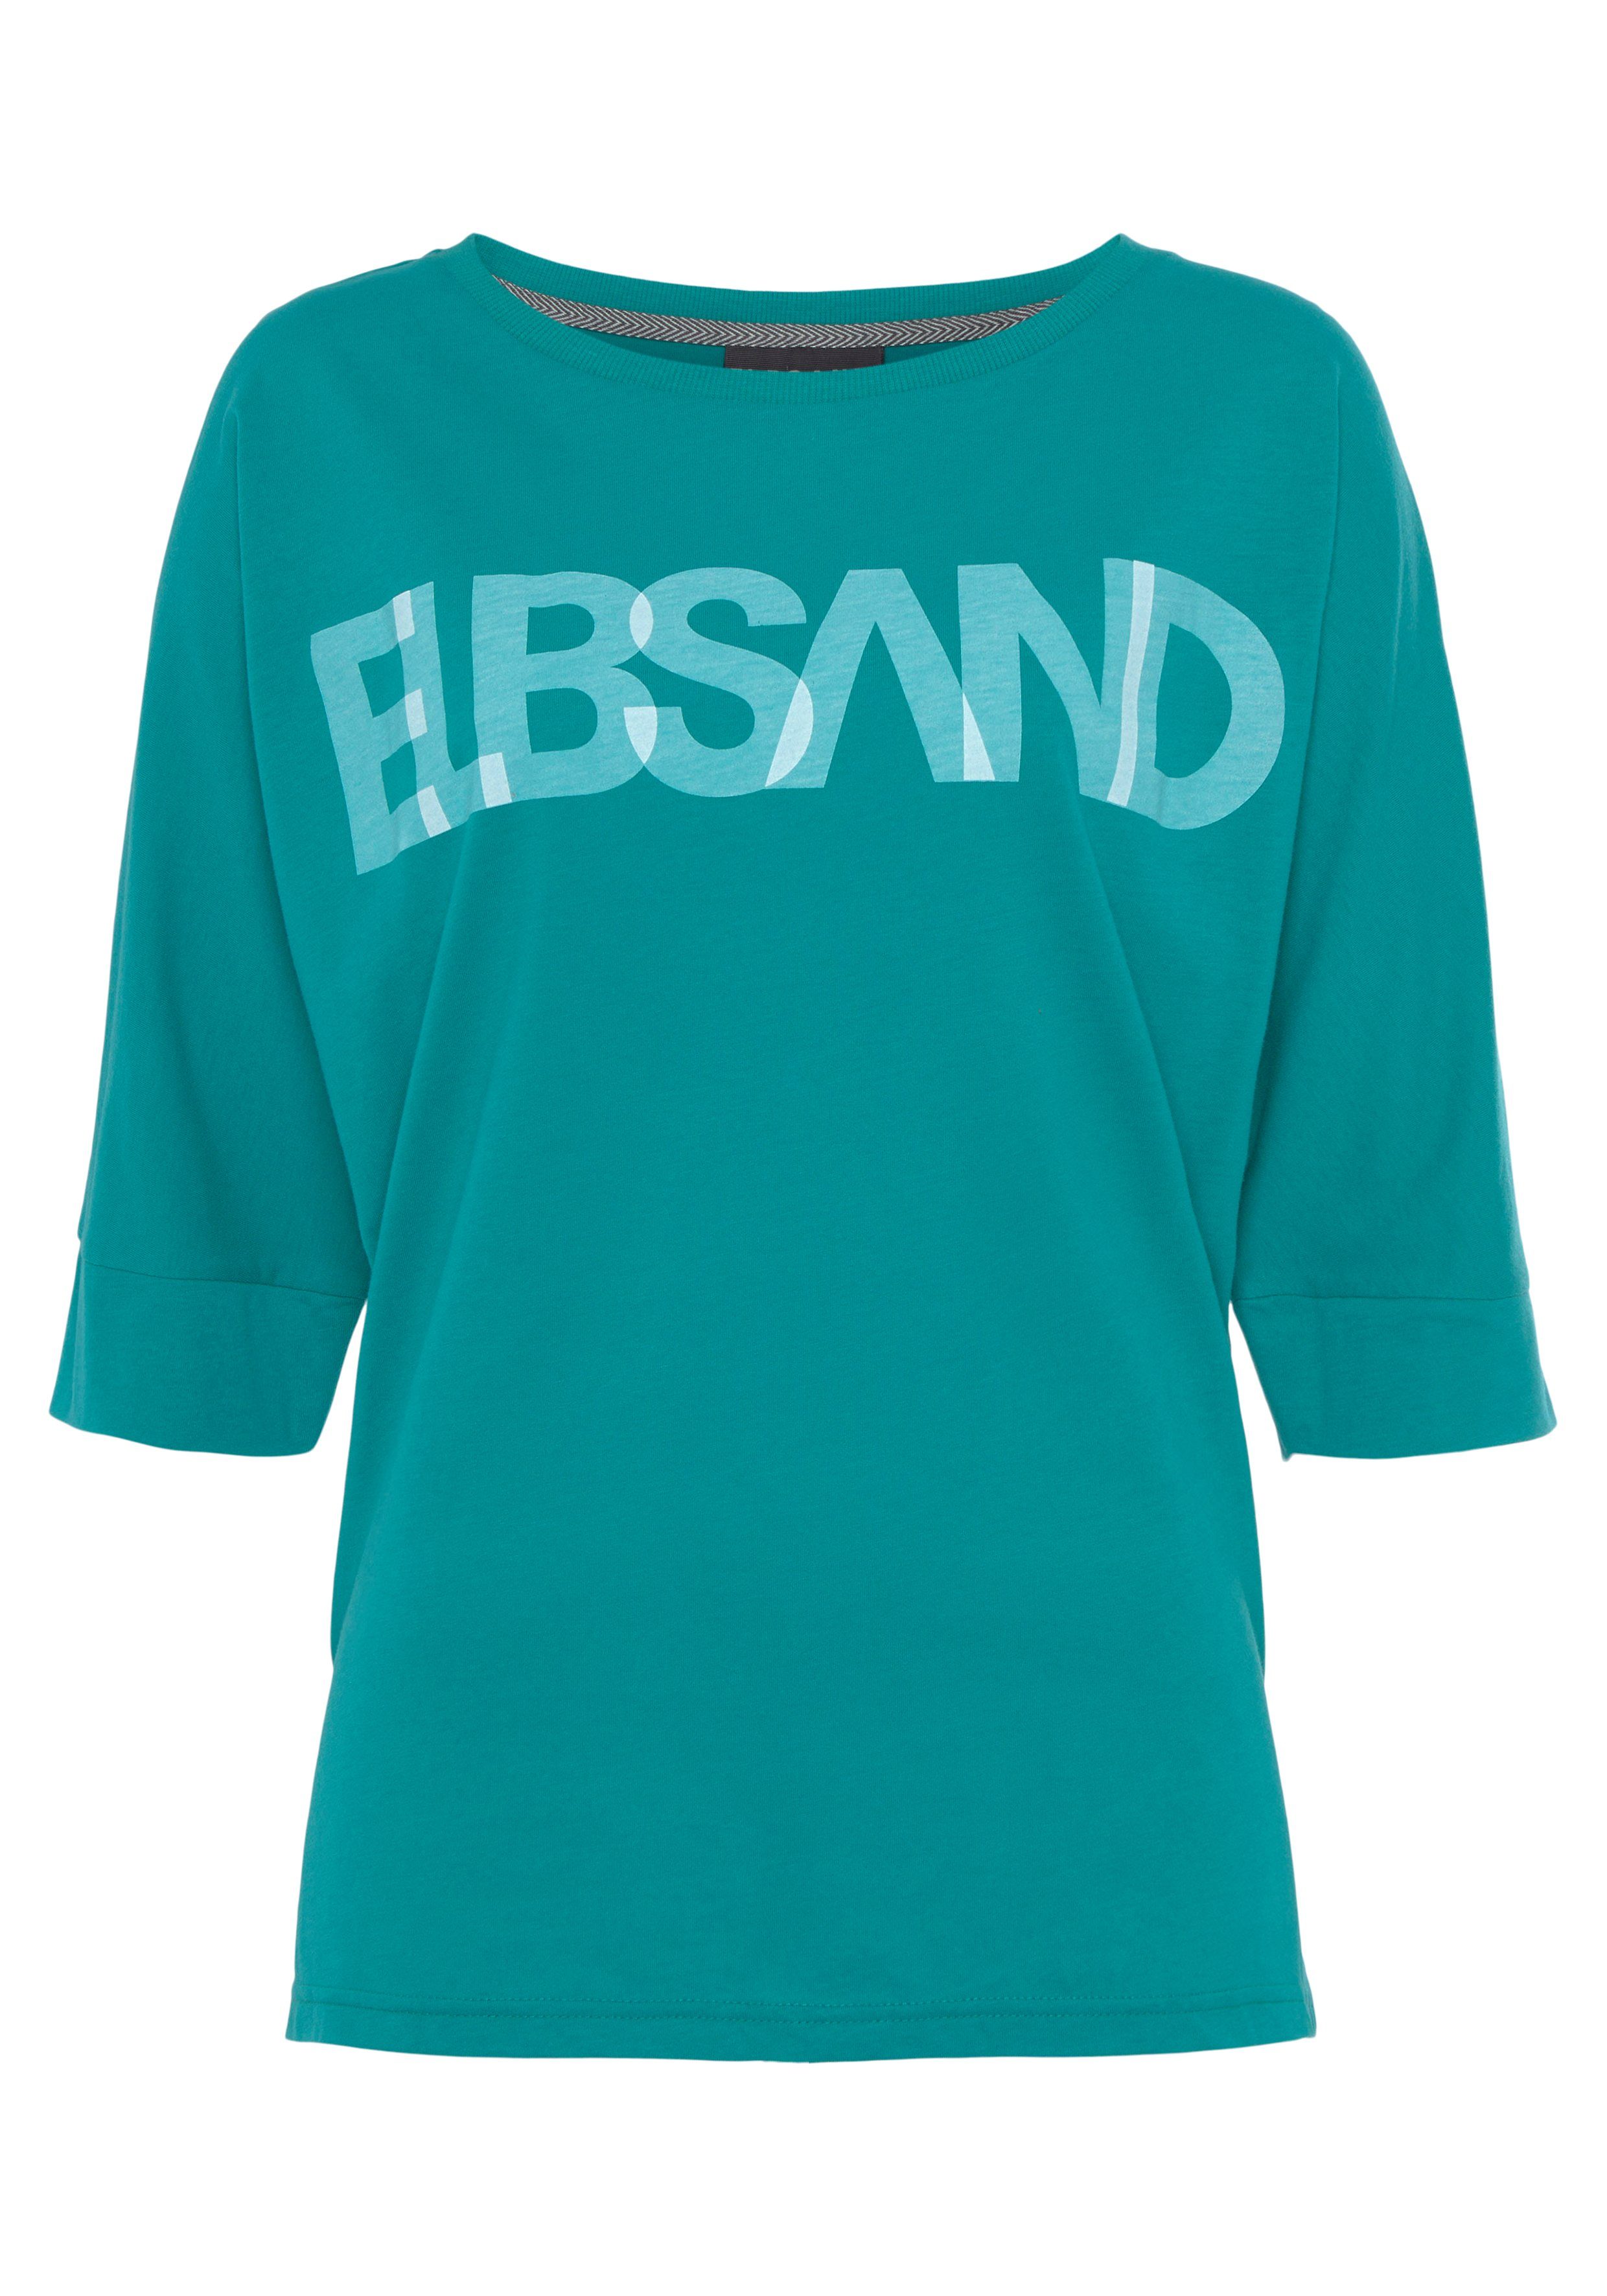 mit lockere 3/4-Arm-Shirt Elbsand teal Baumwoll-Mix, Passform seaweed Logodruck,